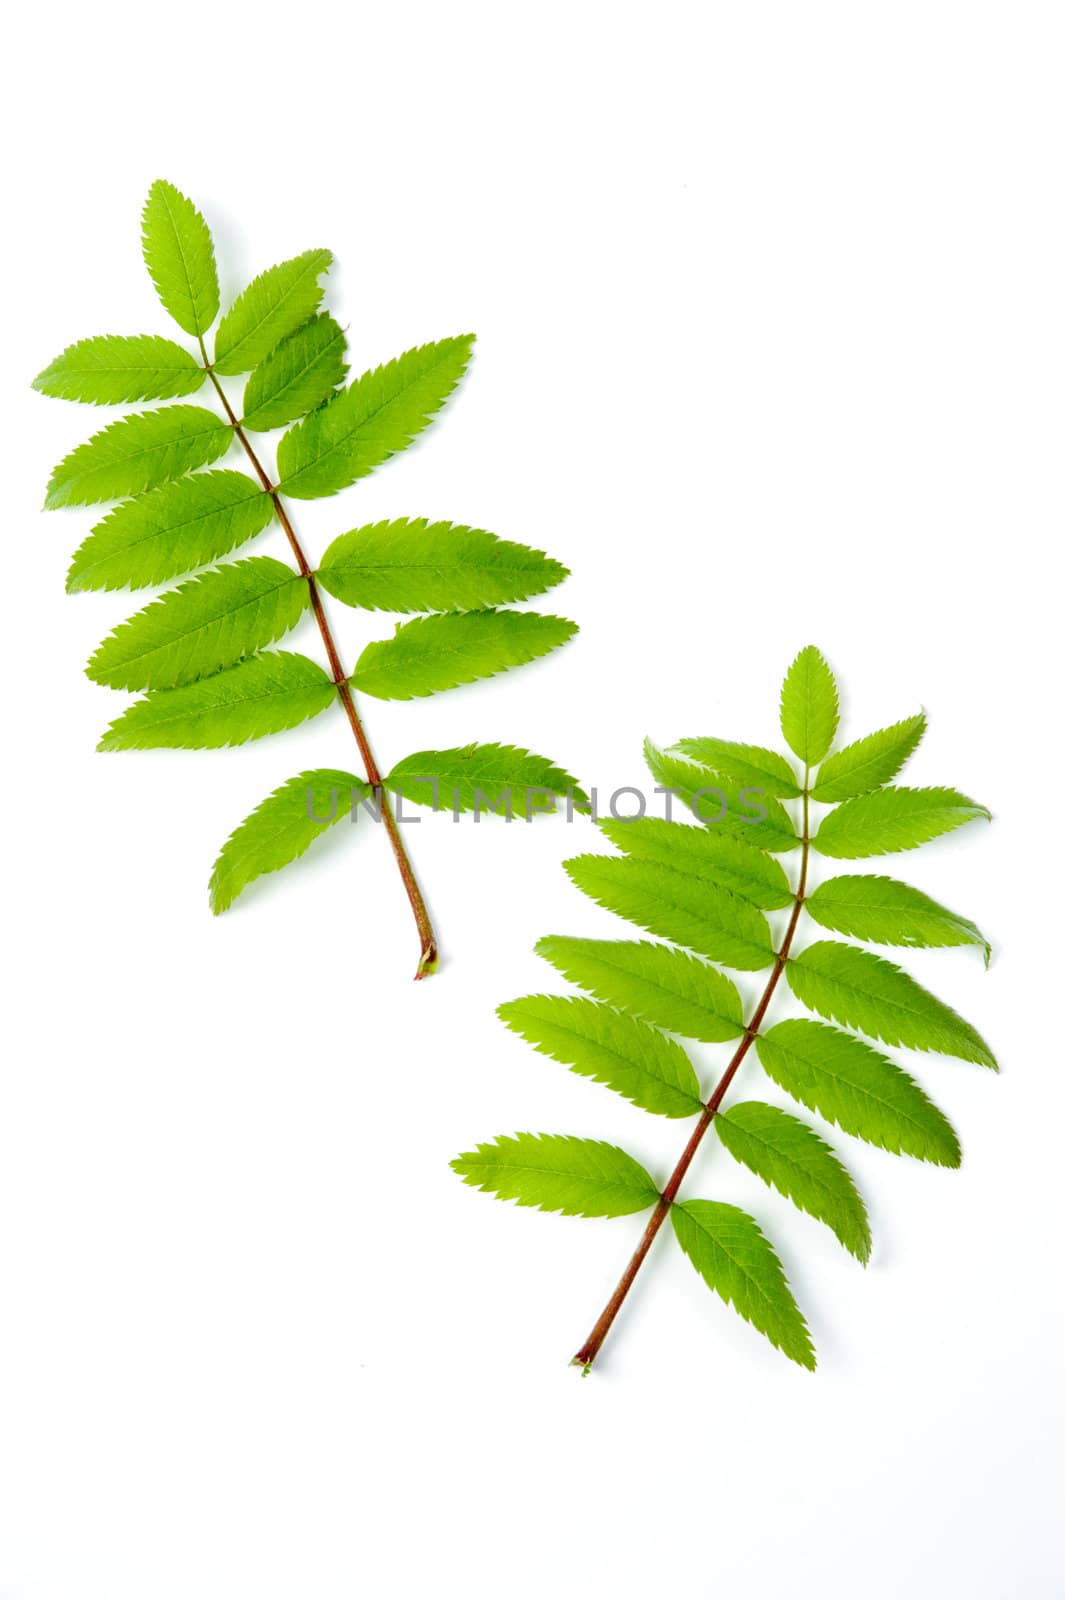 An image of bright green rowan leaves